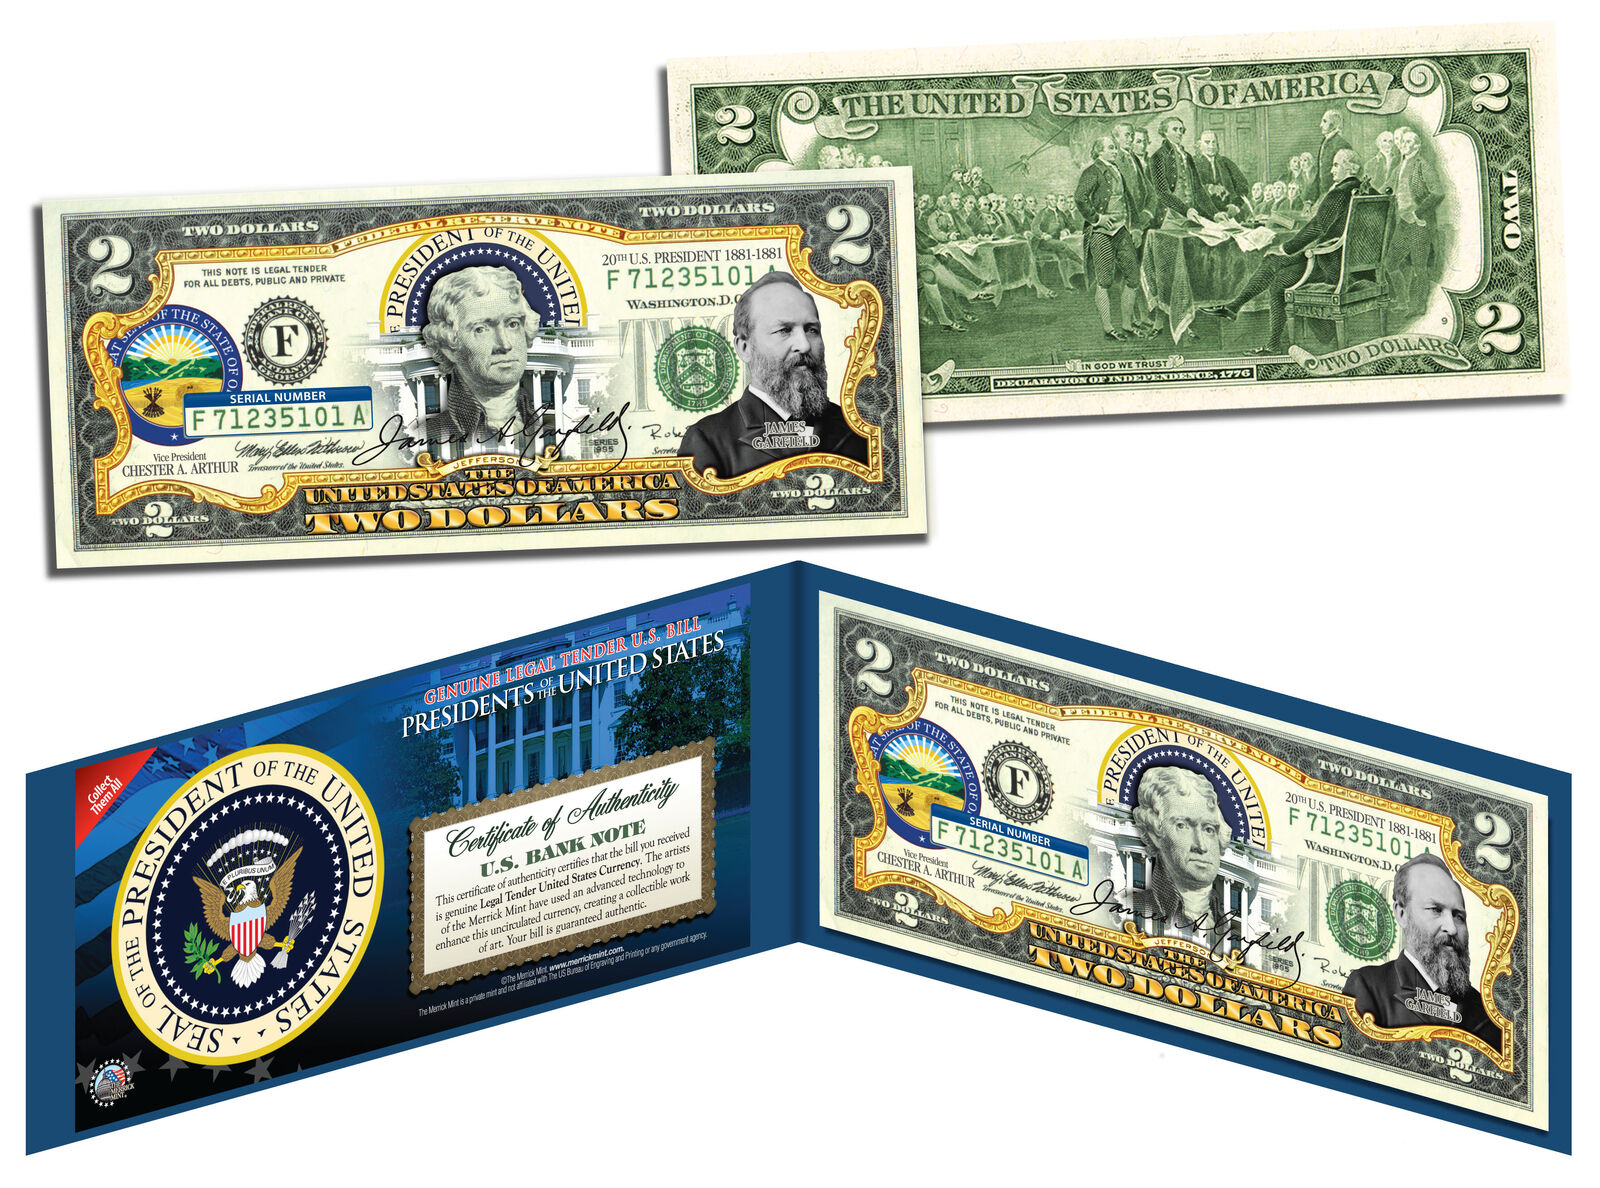 JAMES A GARFIELD * 20th U.S. President * Colorized $2 Bill Genuine Legal Tender